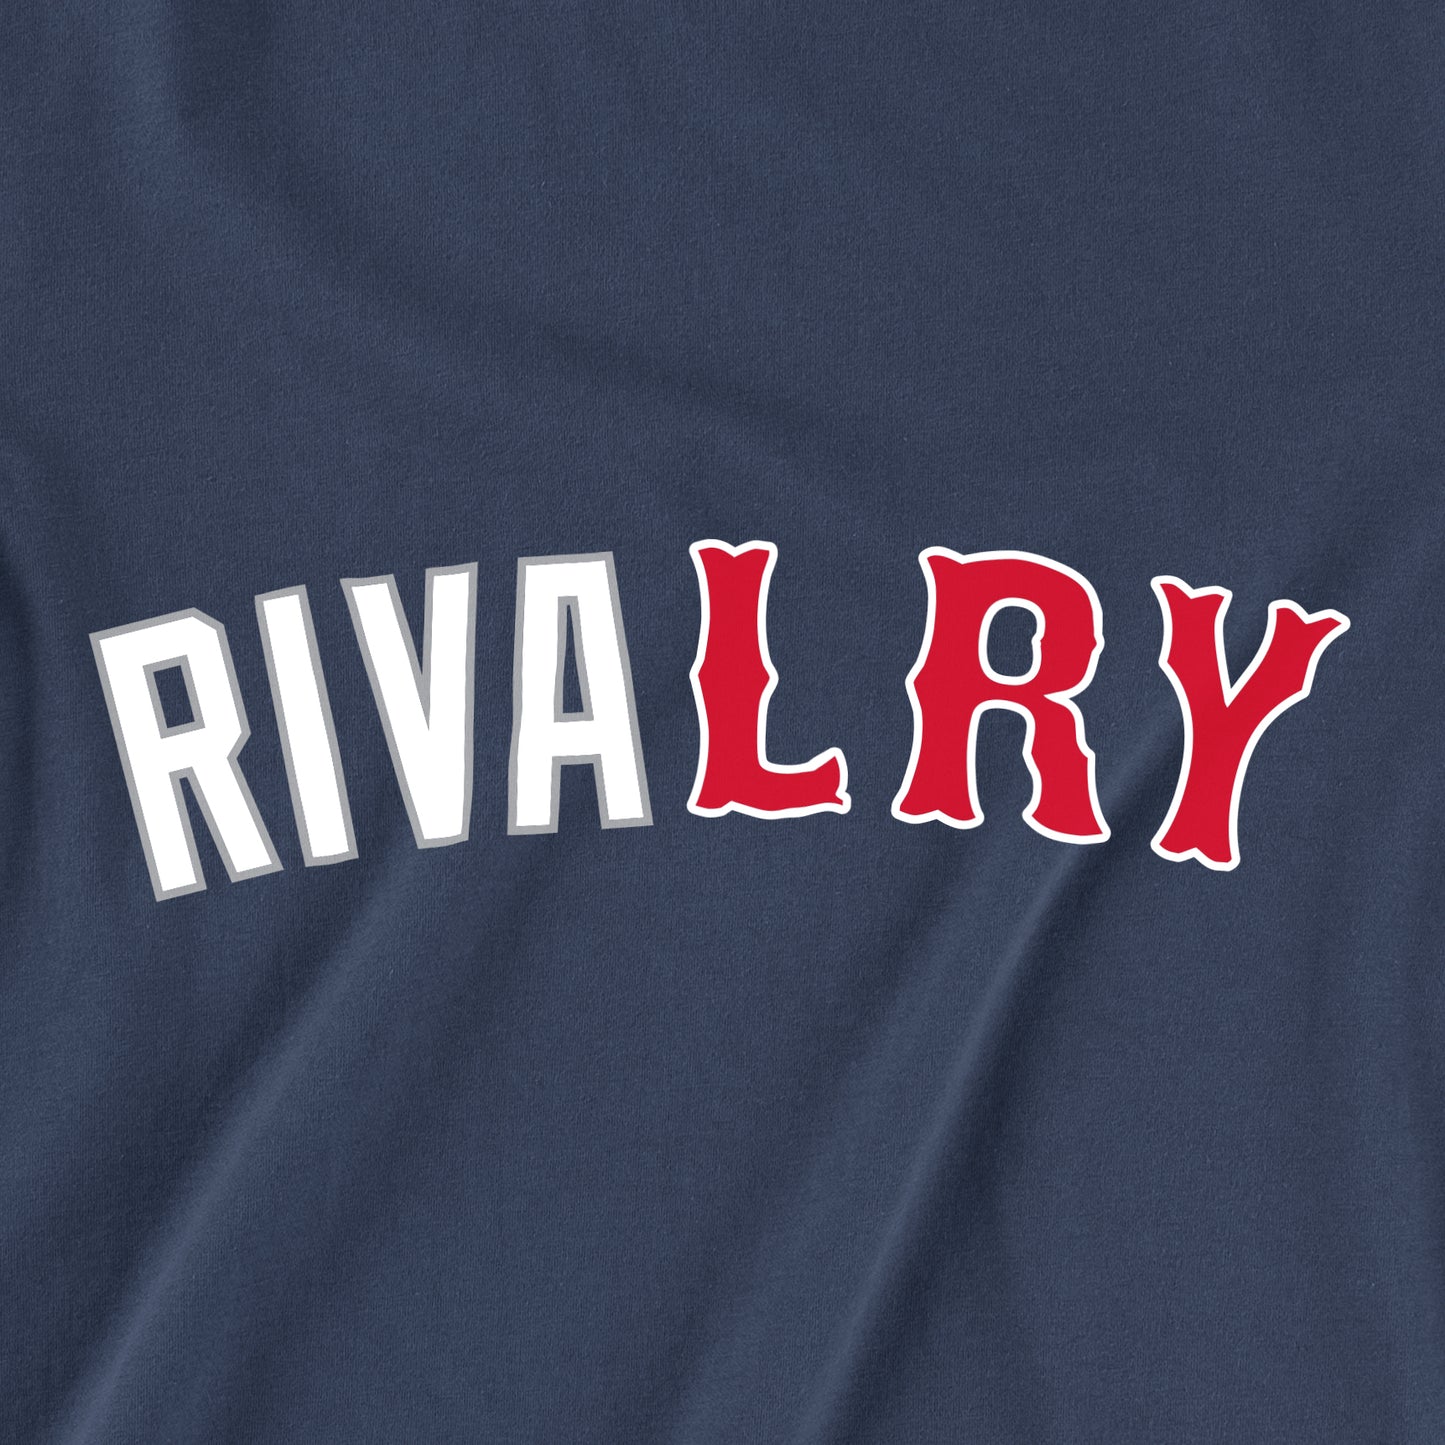 The Rivalry Team Shirt | T-Shirt